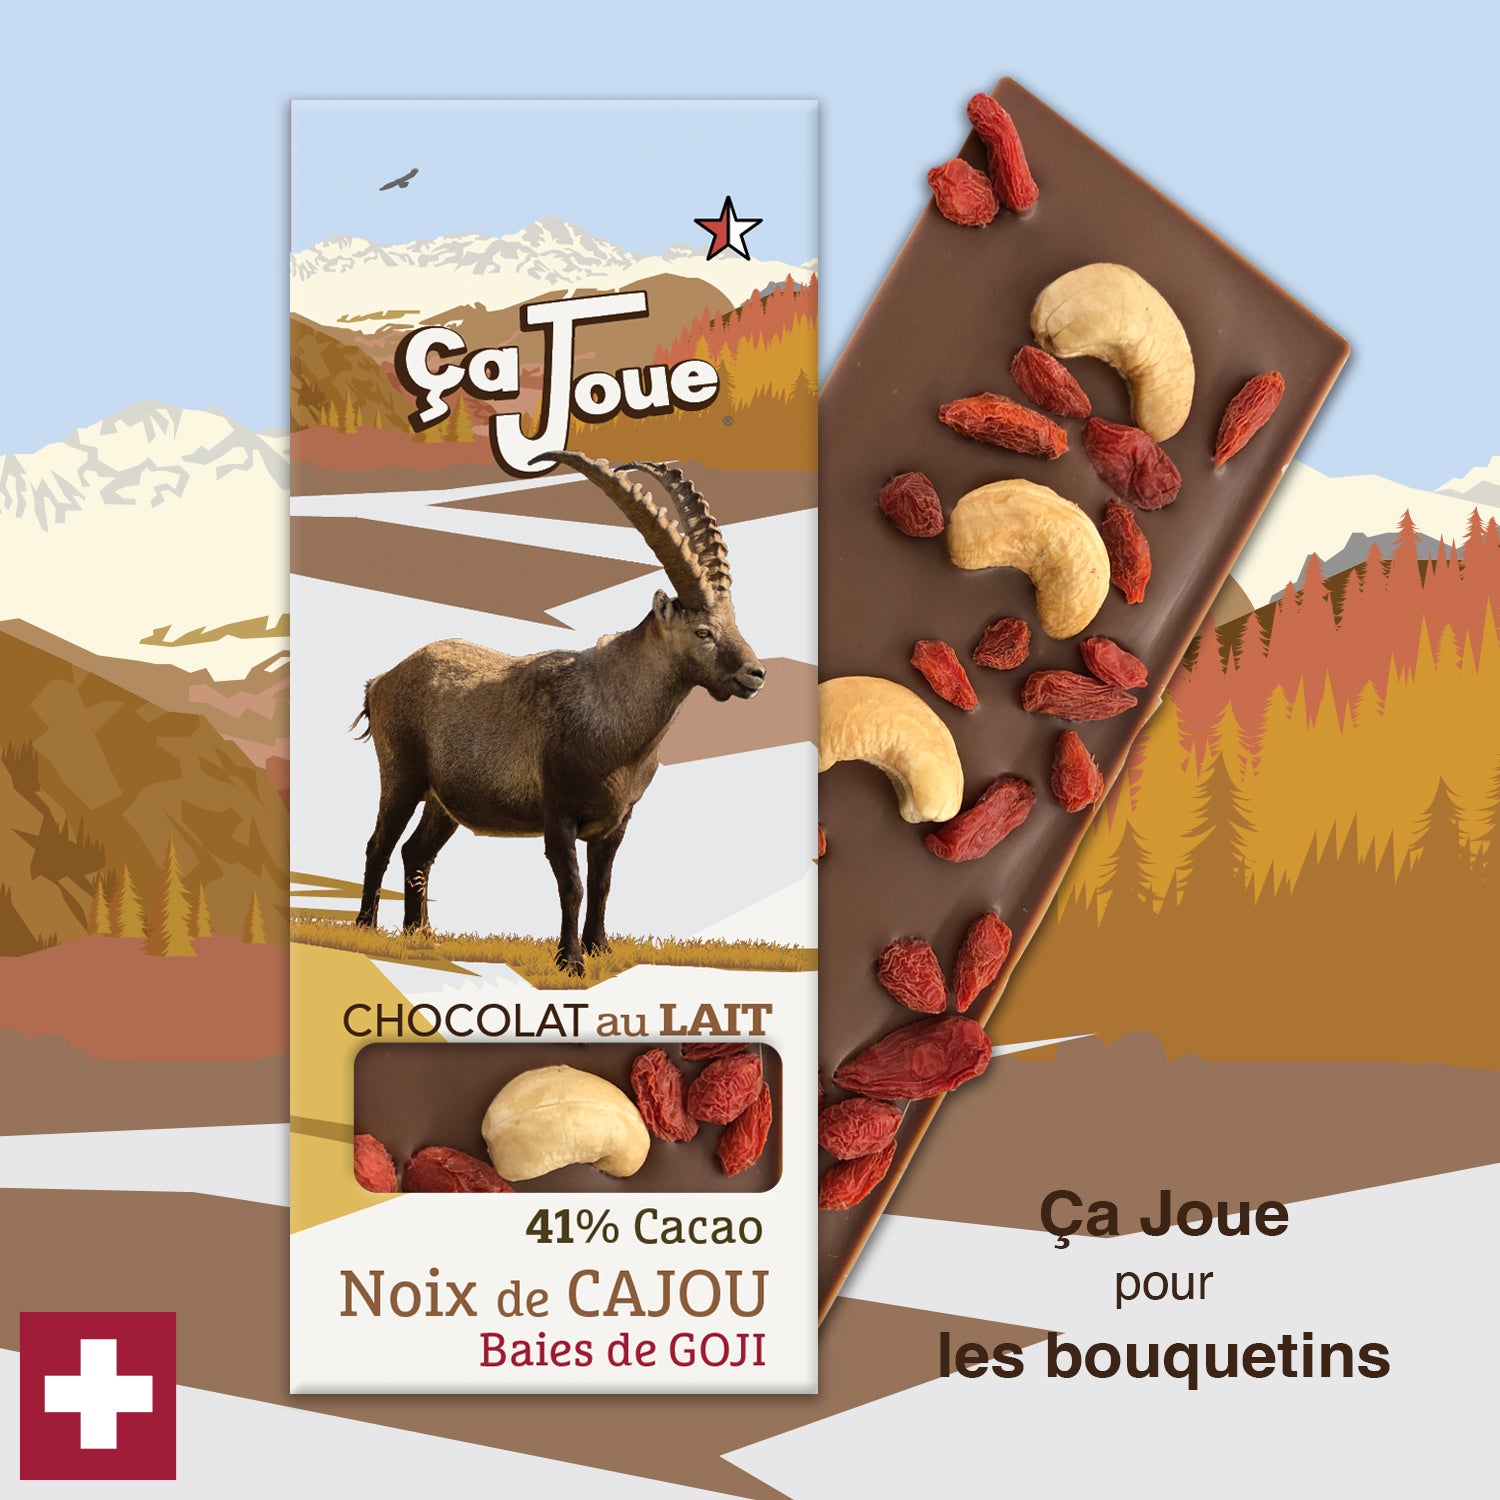 Ça Joue für Ibex (Ref-BL3) Milchschokolade aus Val de Bagnes